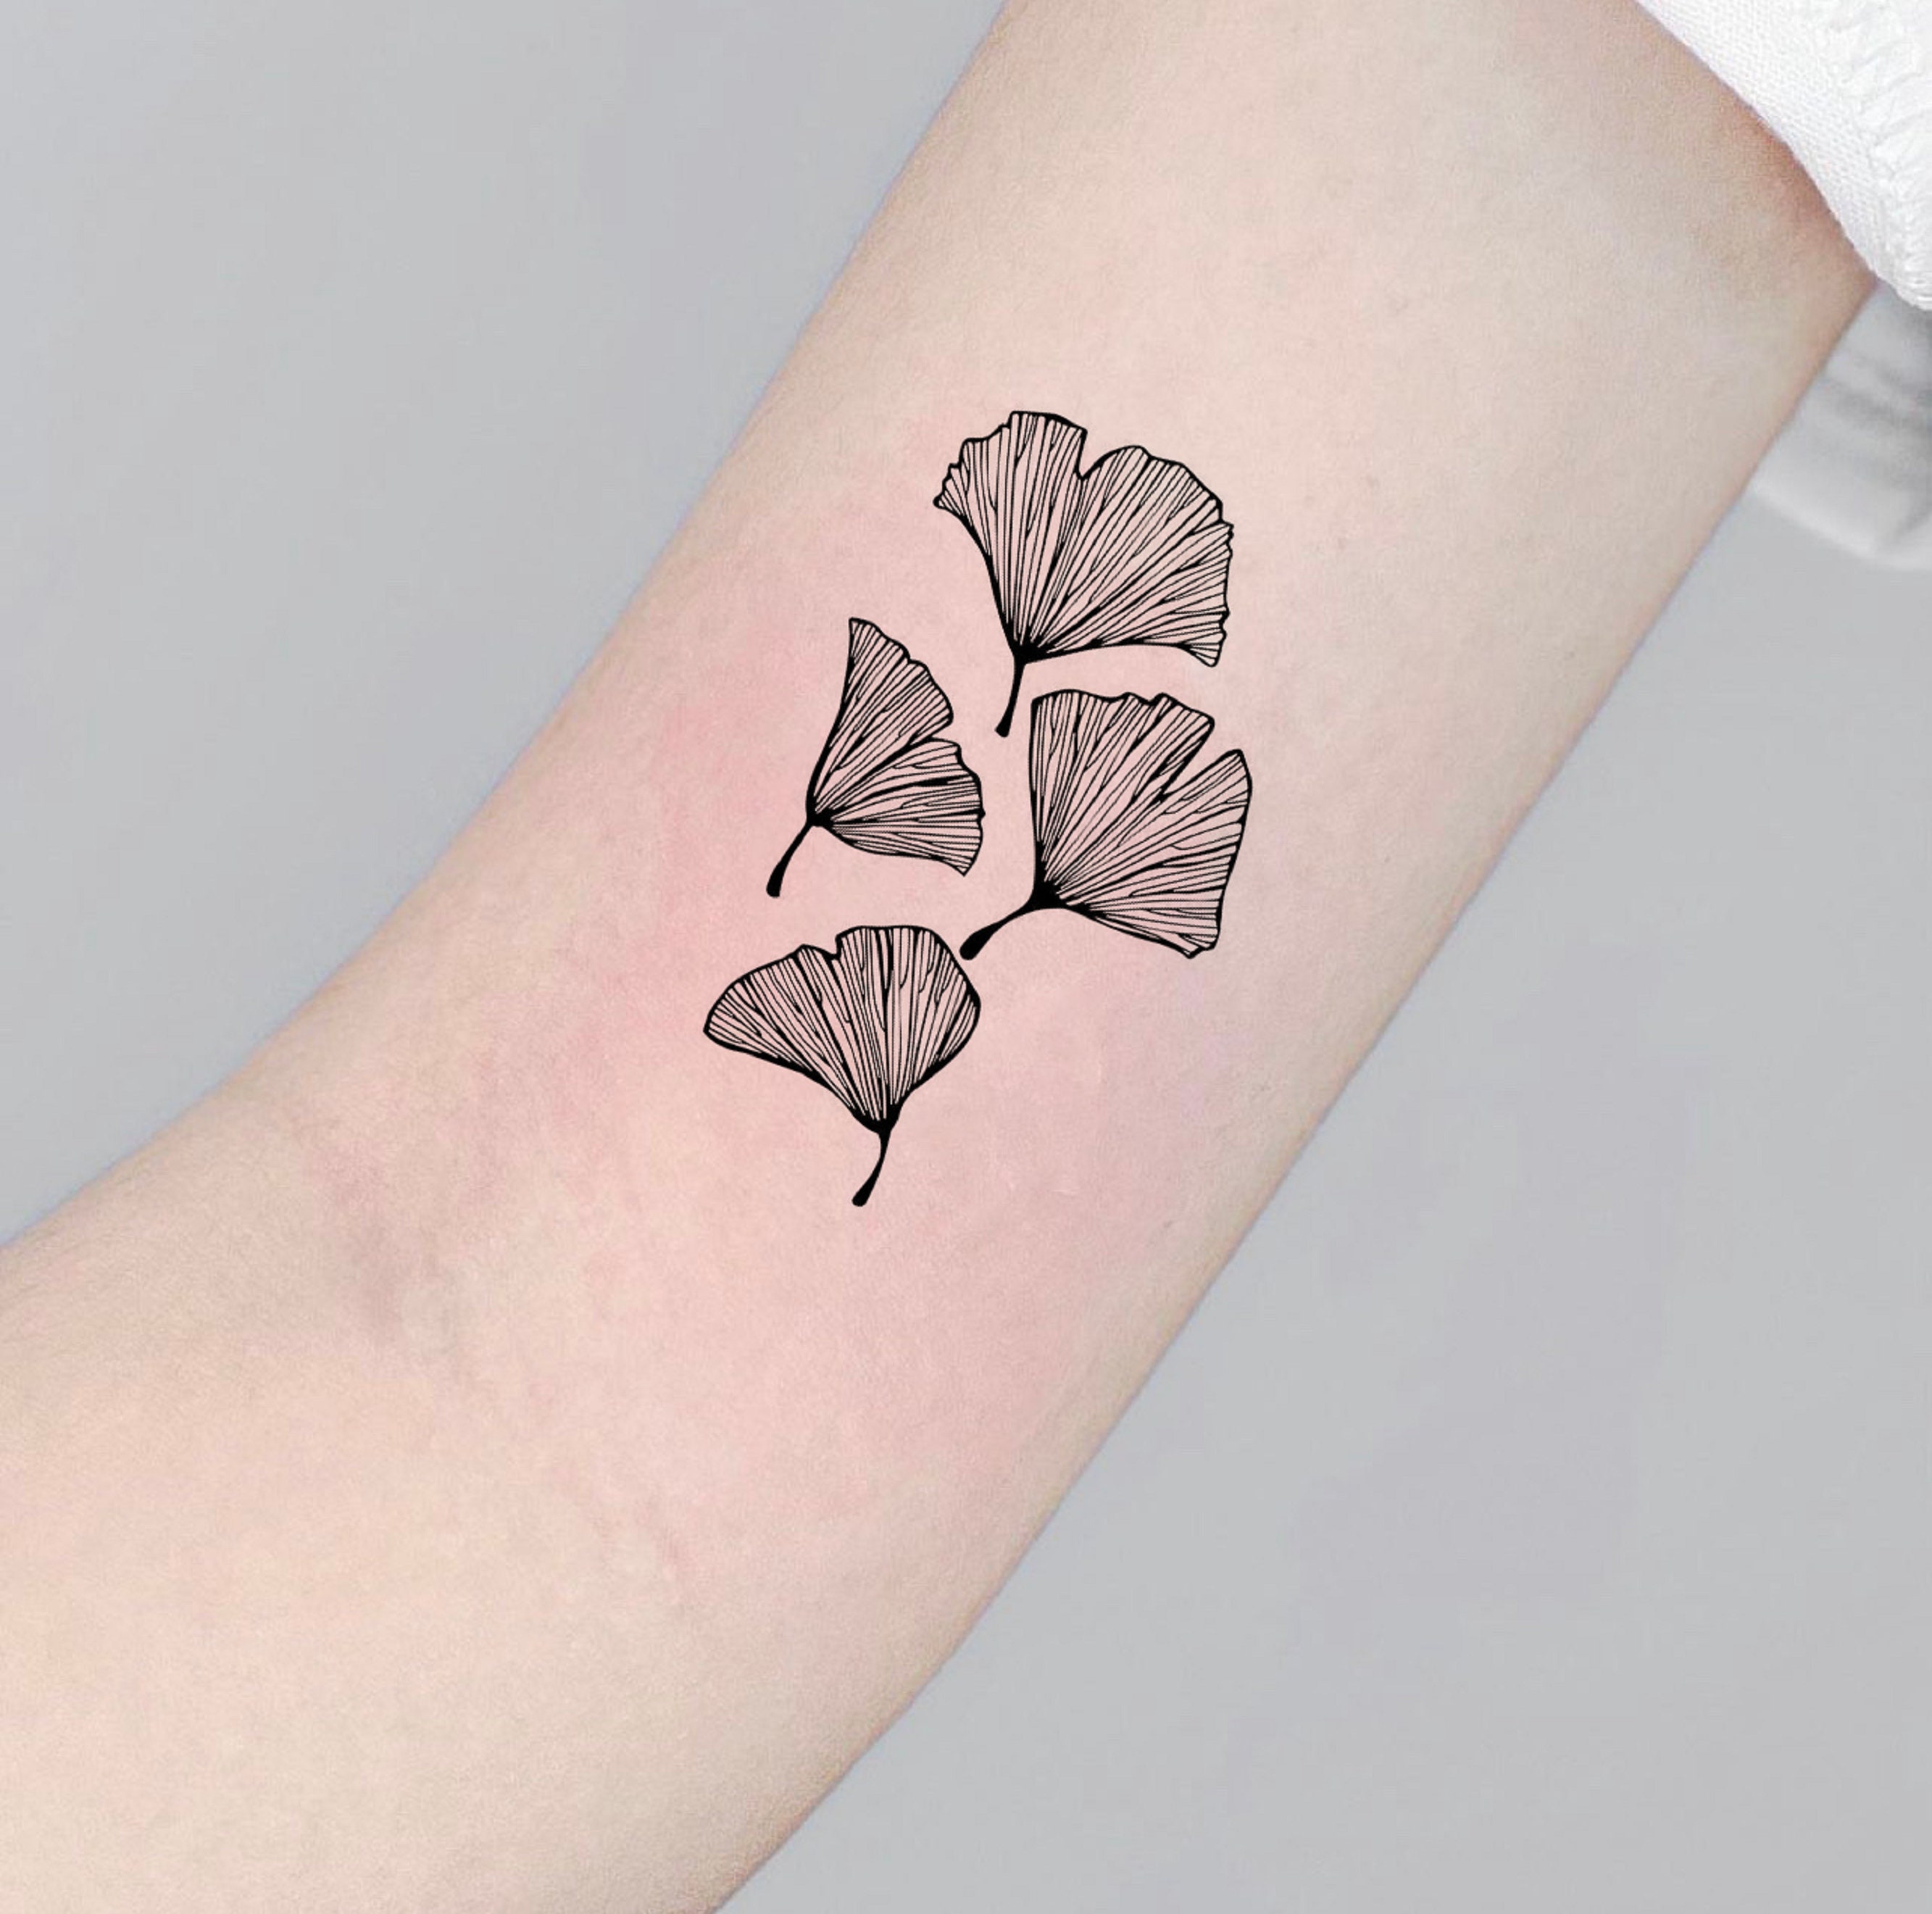 16 Beautiful Tattoos That Symbolize Hope